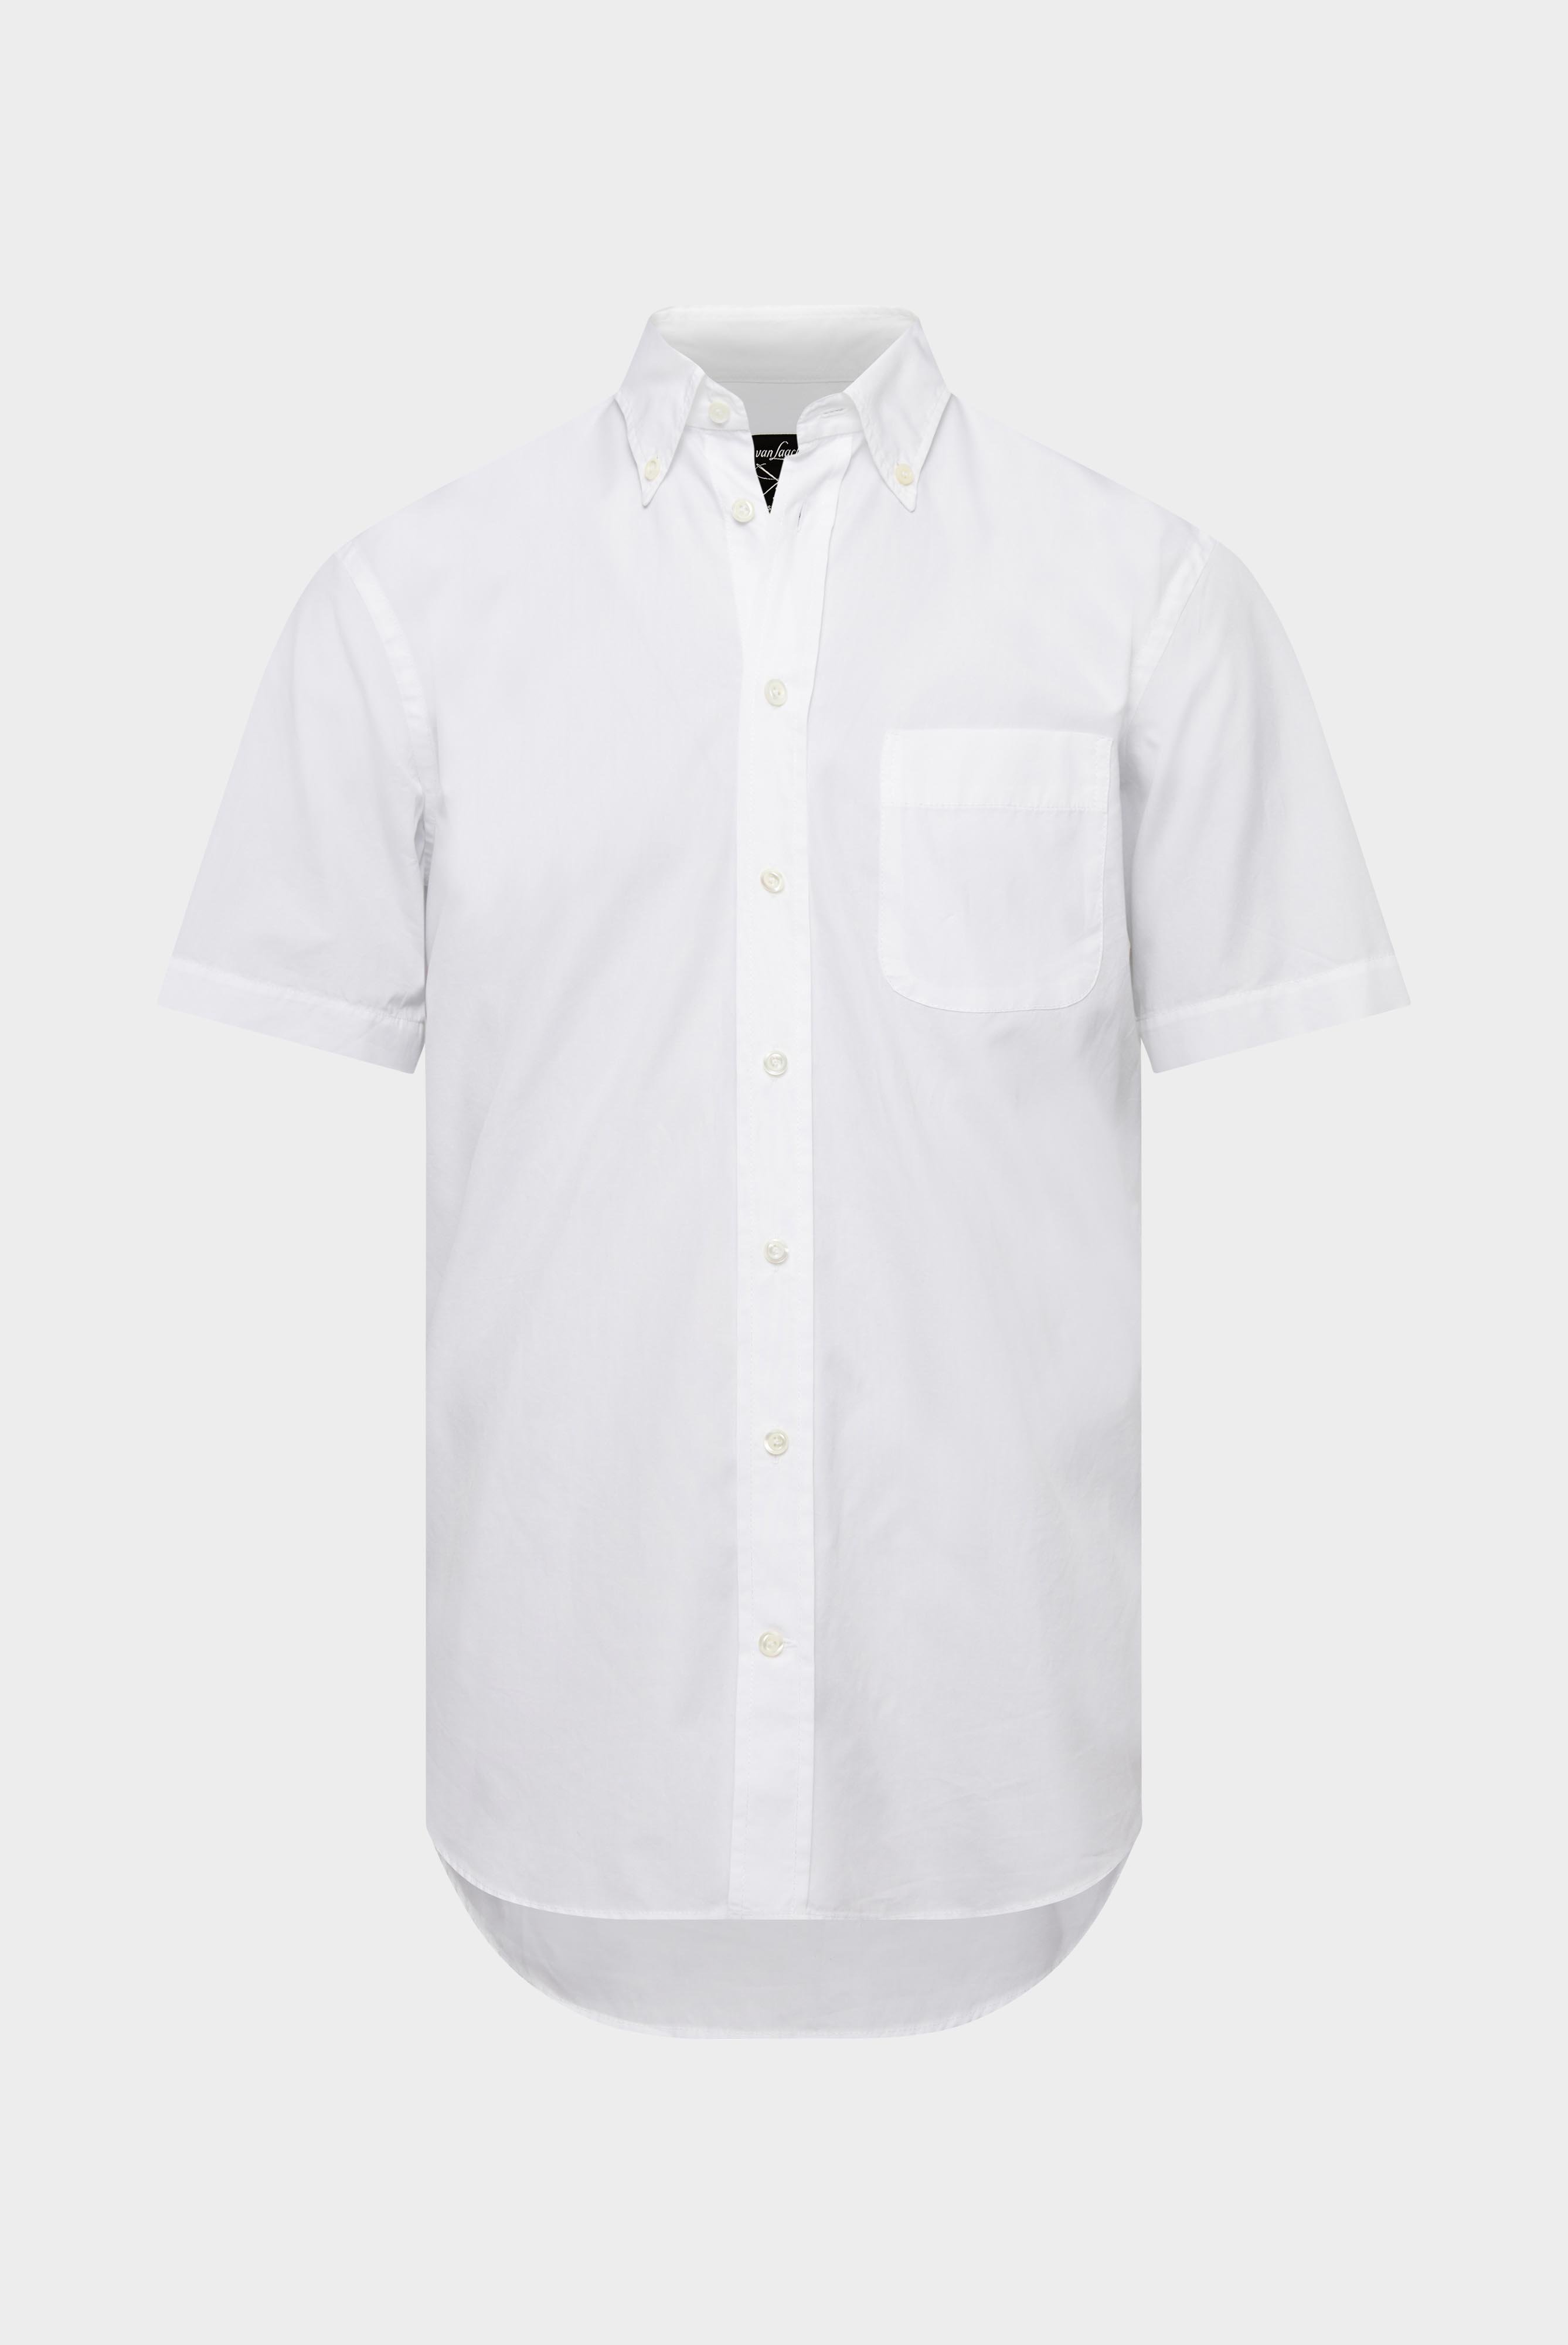 Casual Shirts+Short-sleeved shirt in dark cotton poplin+20.2056.Q2.130648.000.39